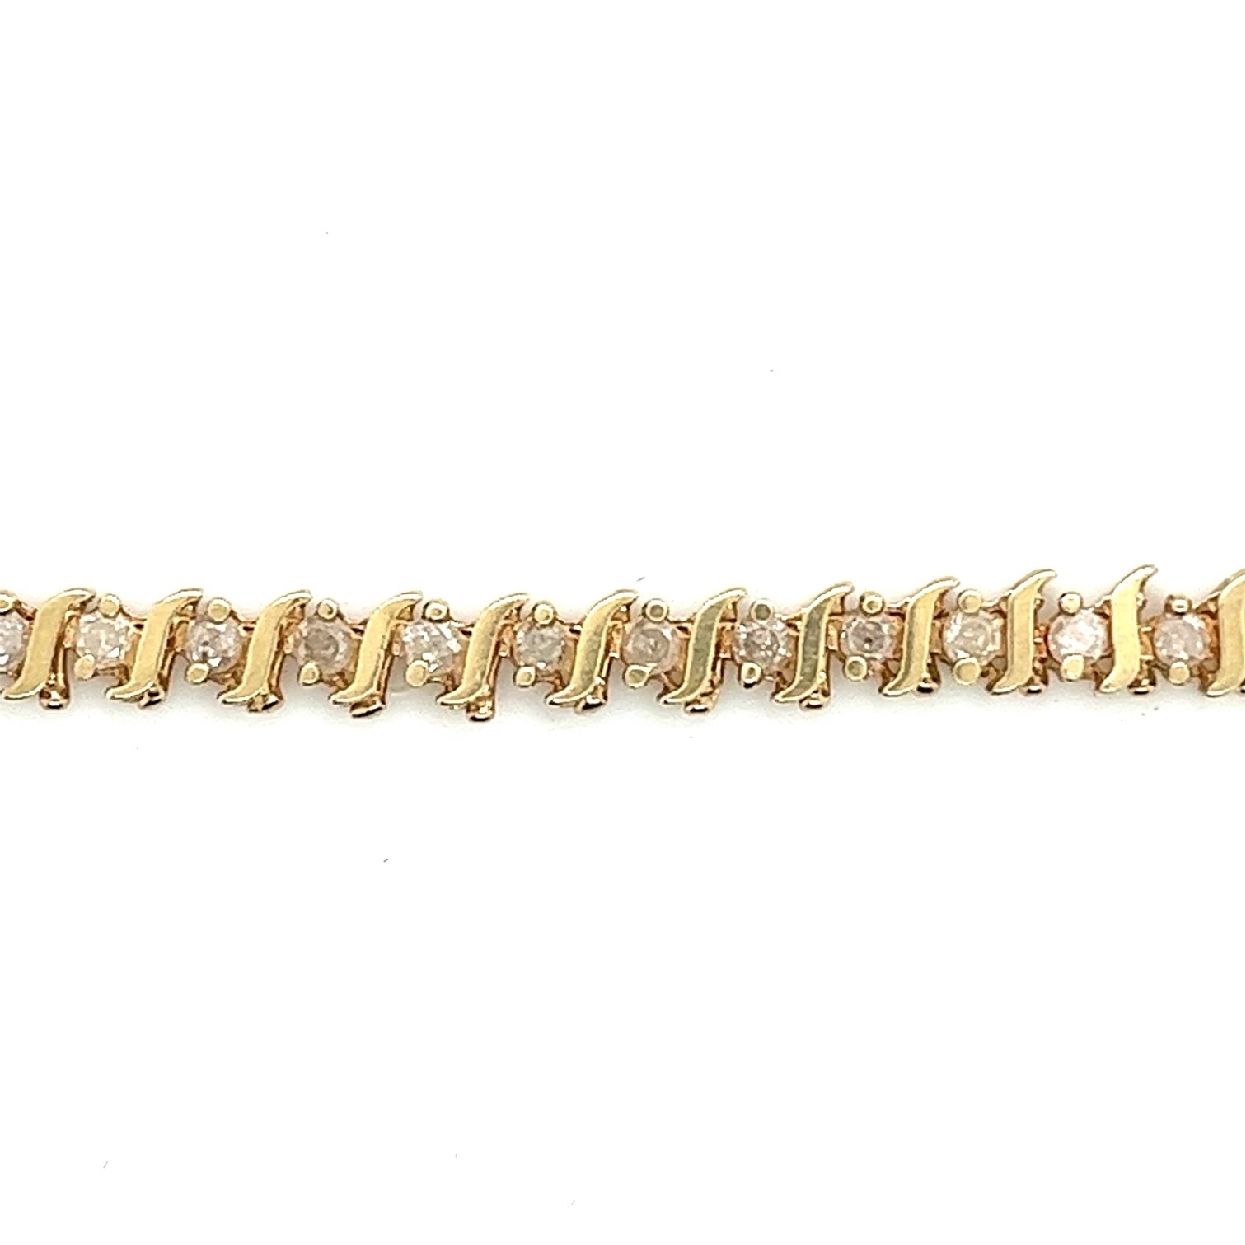 10K Yellow Gold Diamond Tennis Bracelet
48 Diamonds

7 1/2 Inches